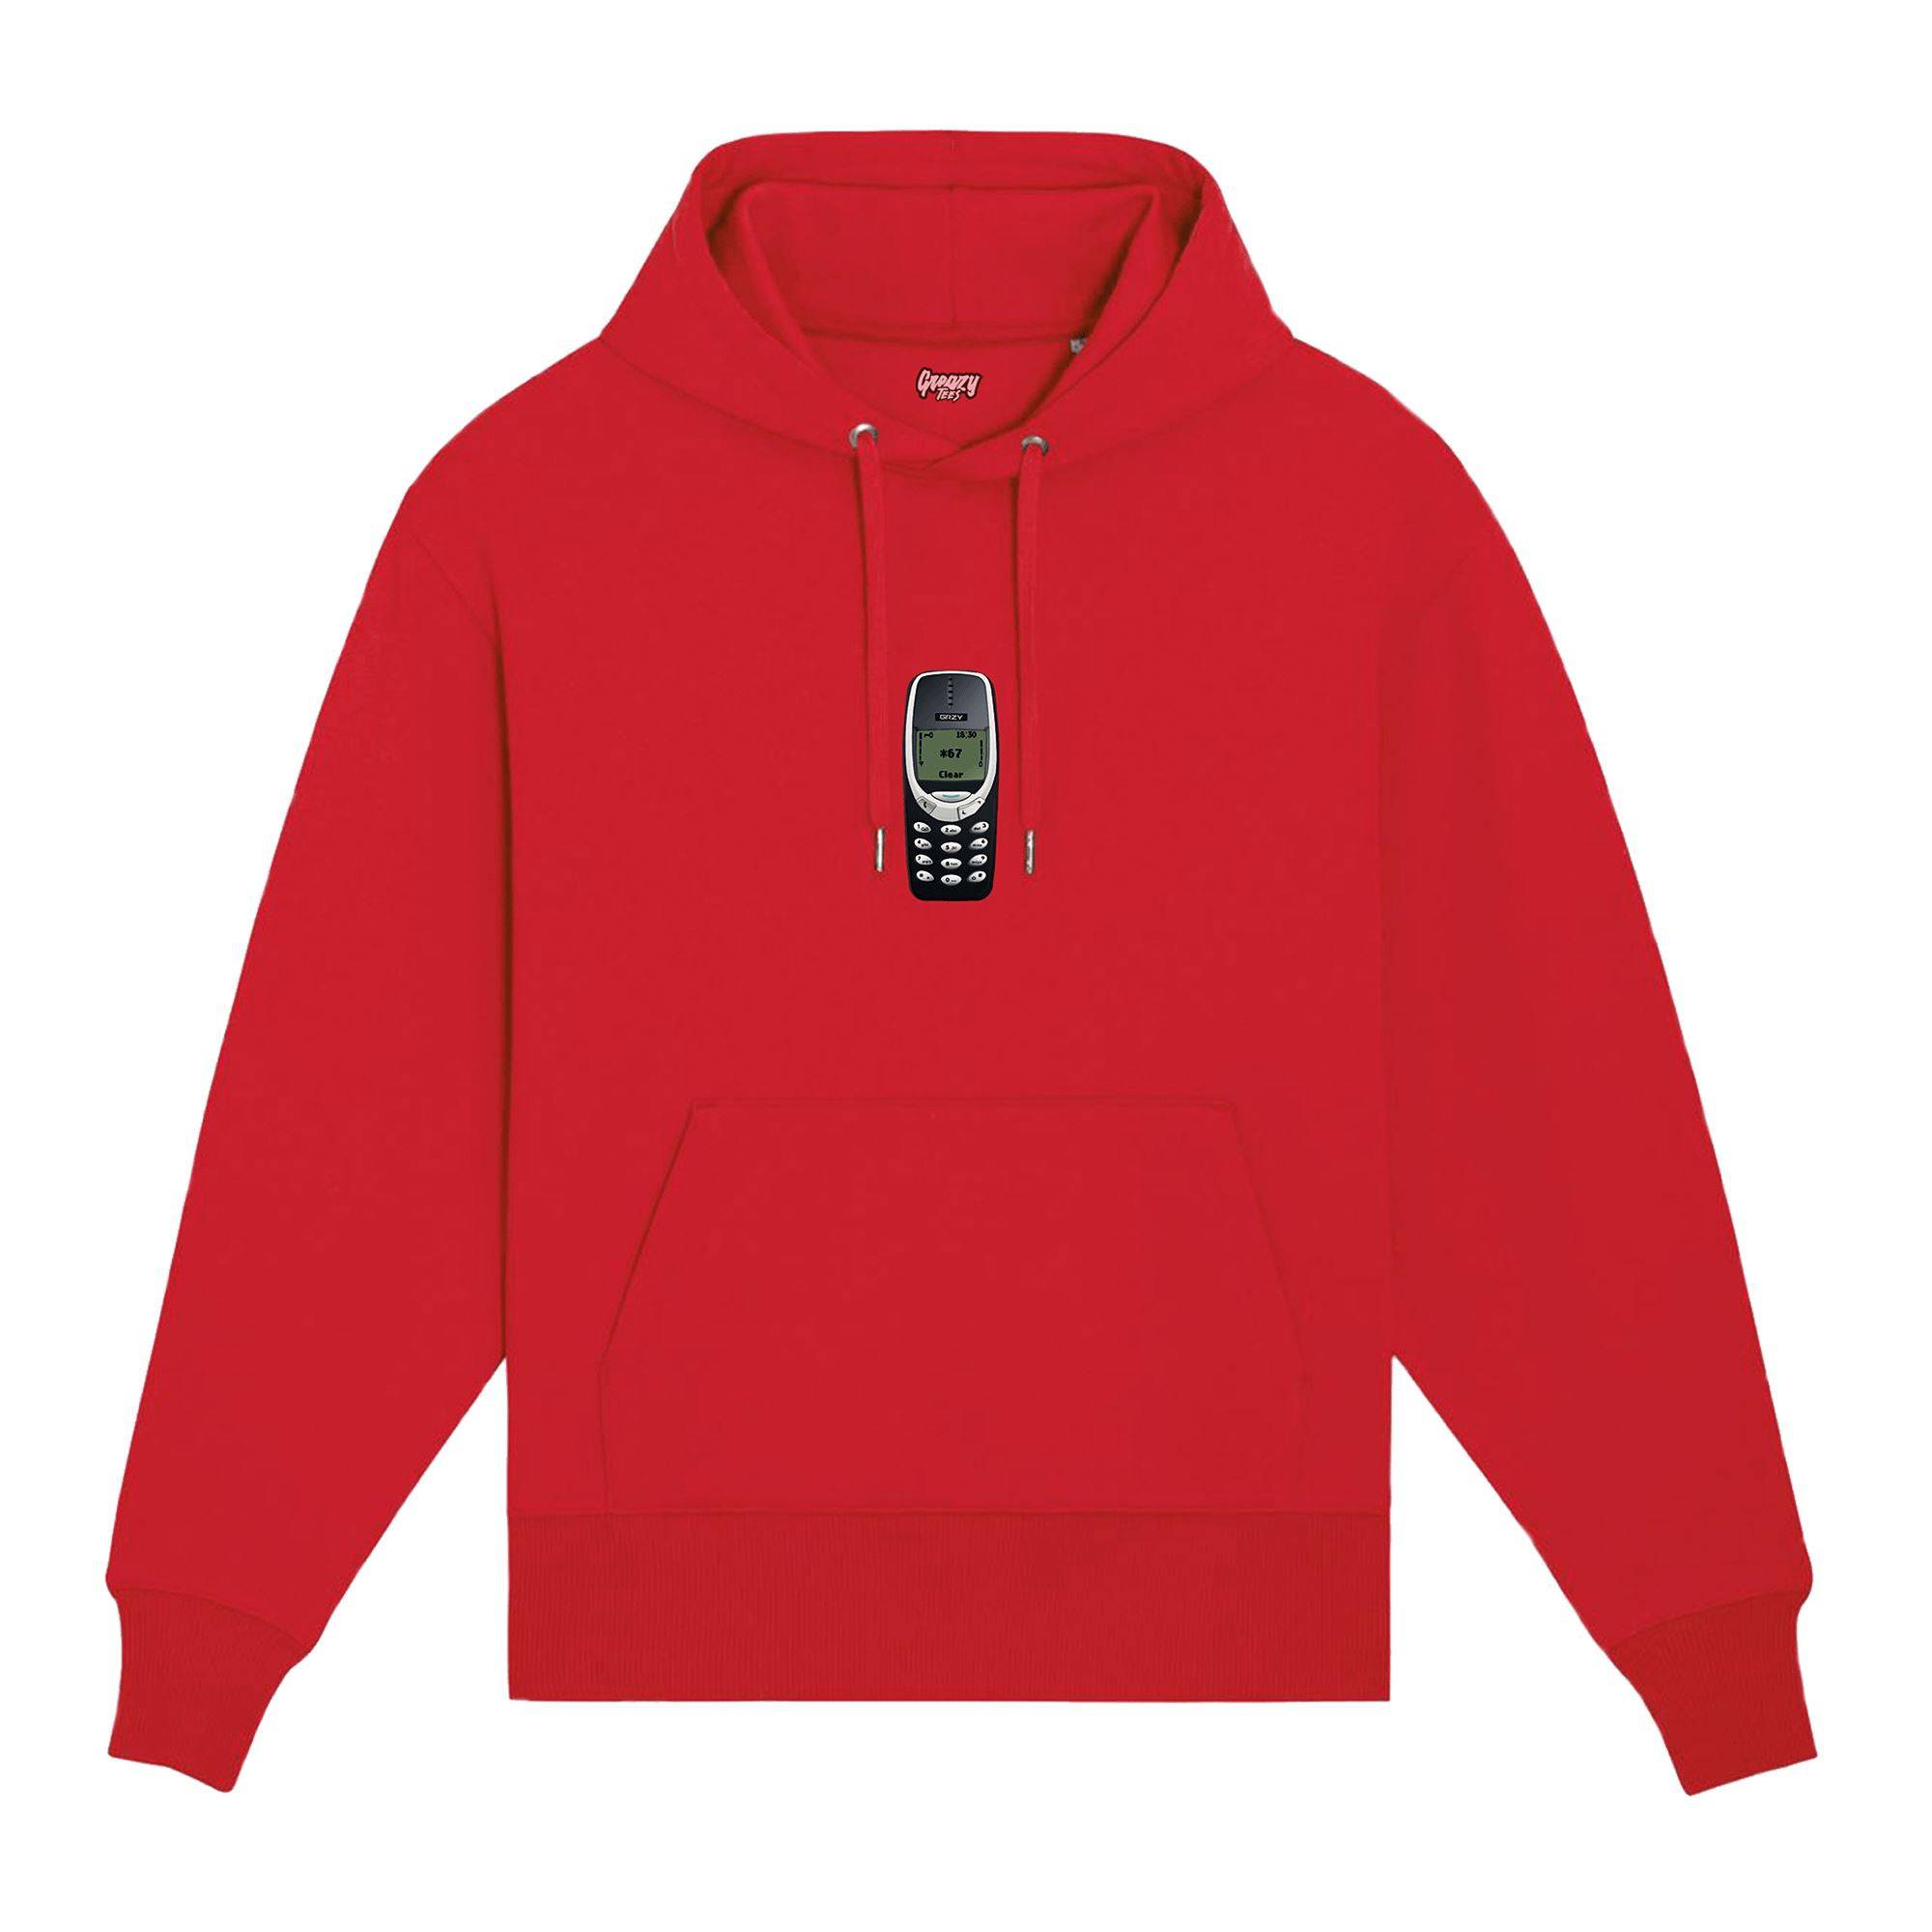 Star67 Hoody Sweatshirt Greazy Tees XS Red Oversized